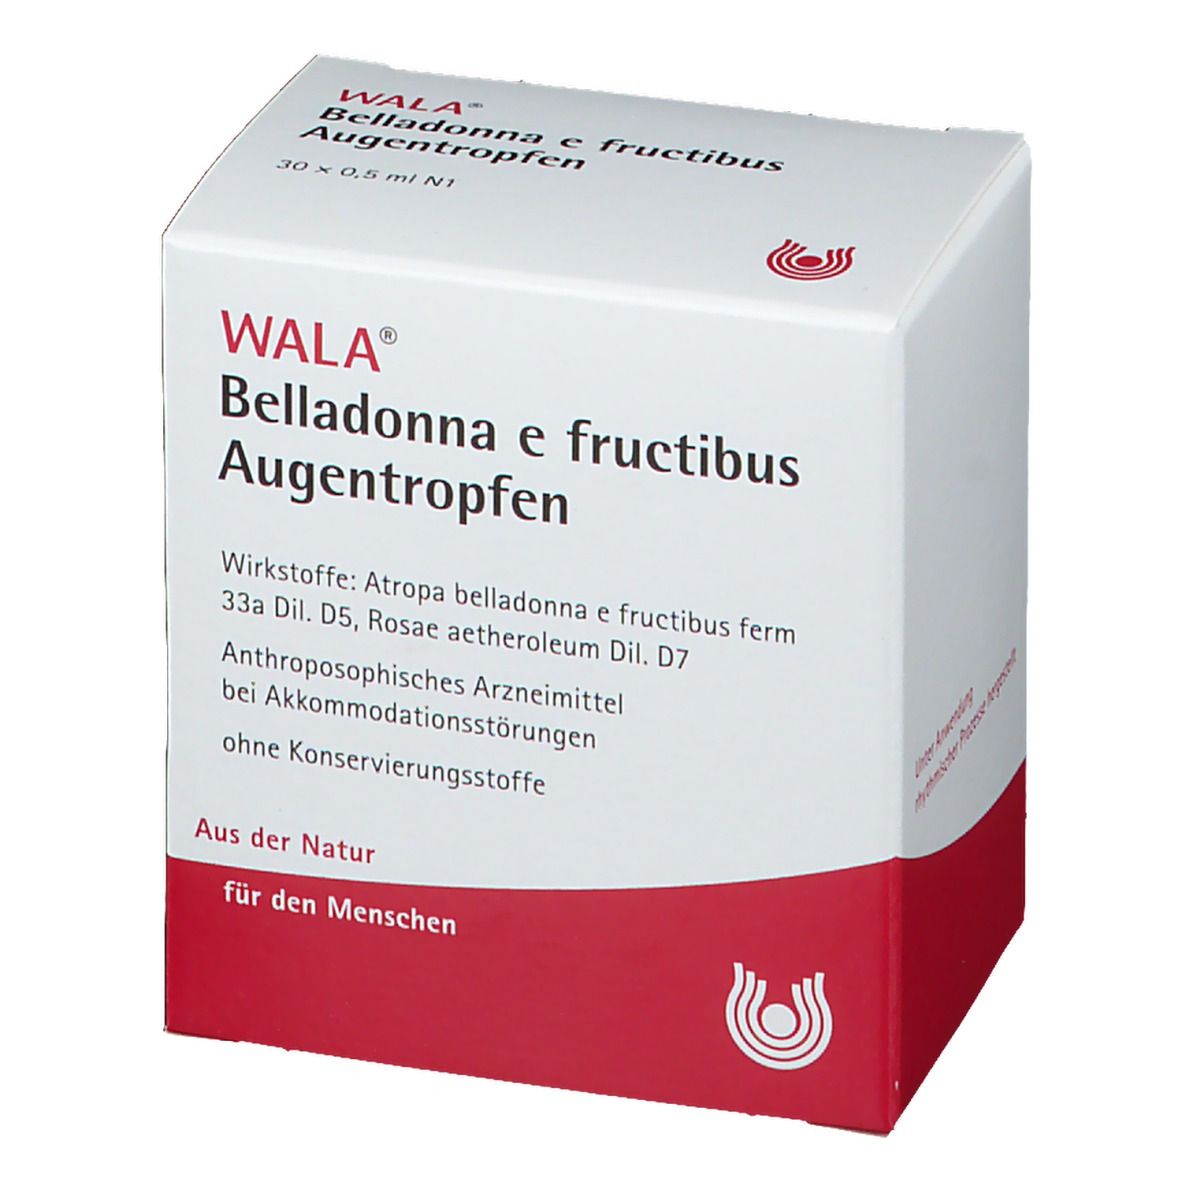 WALA® Belladonna E Fructibus Augentropfen